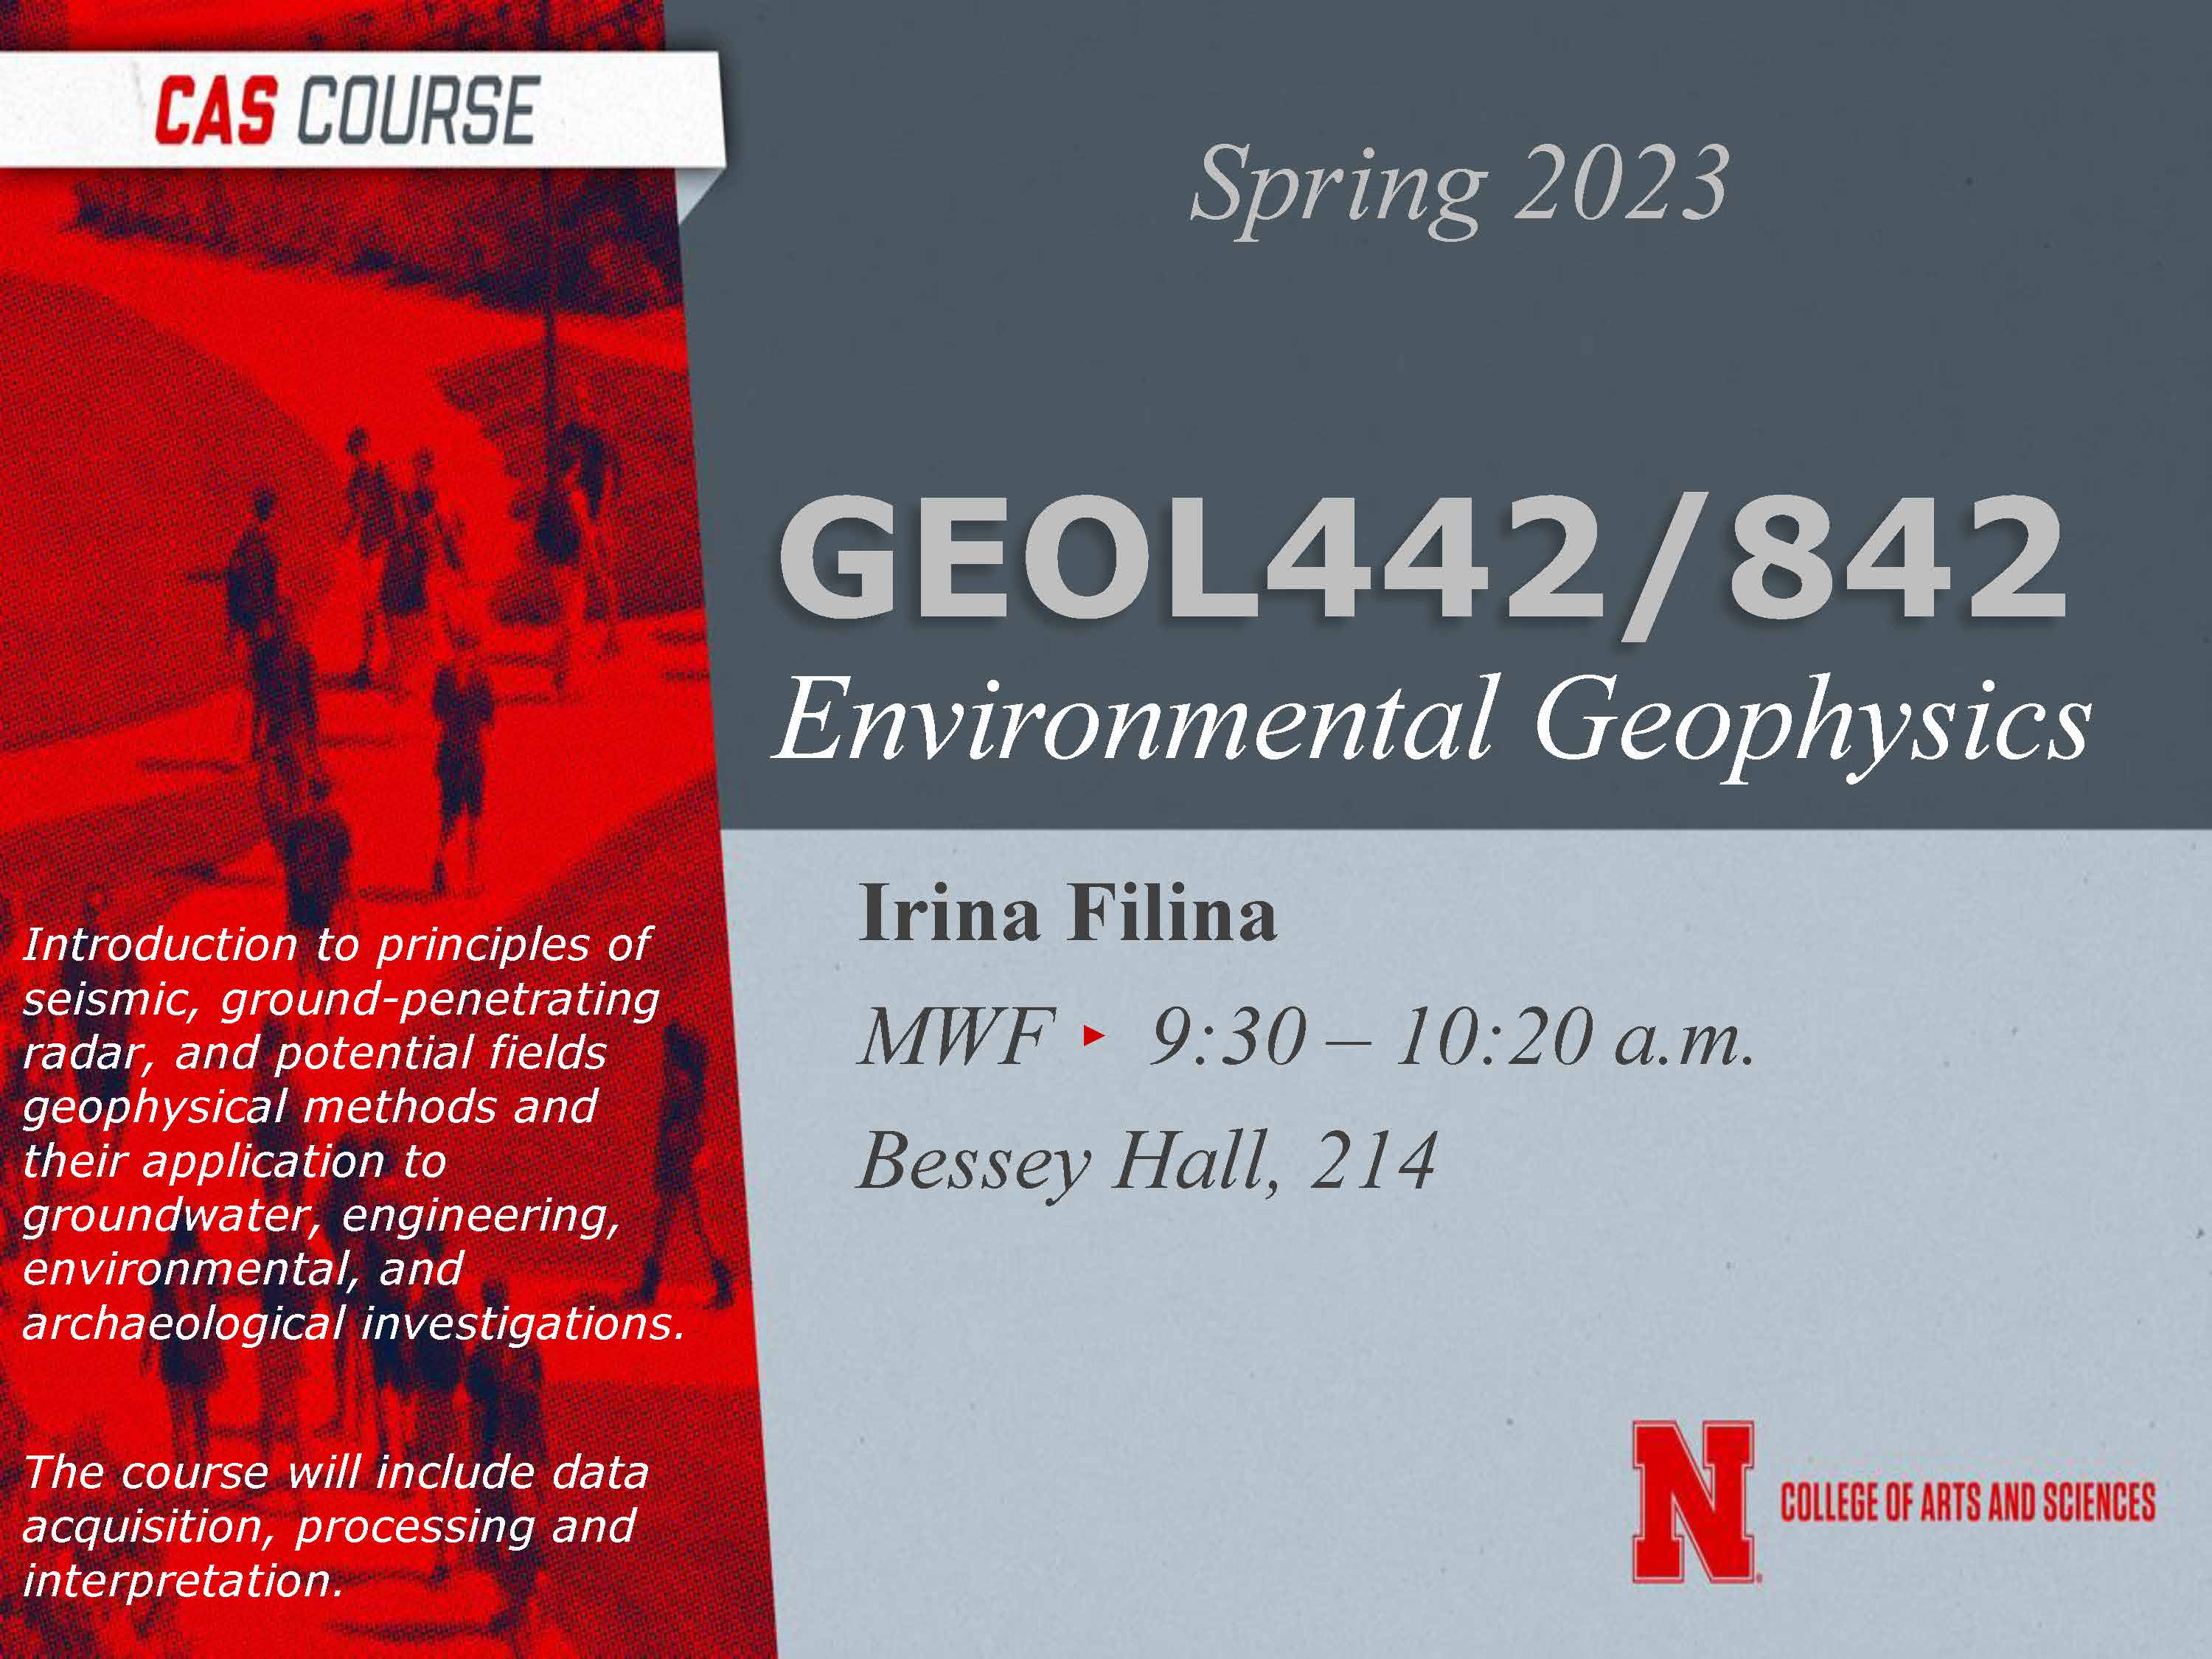 GEOL 442/842: Environmental Geophysics